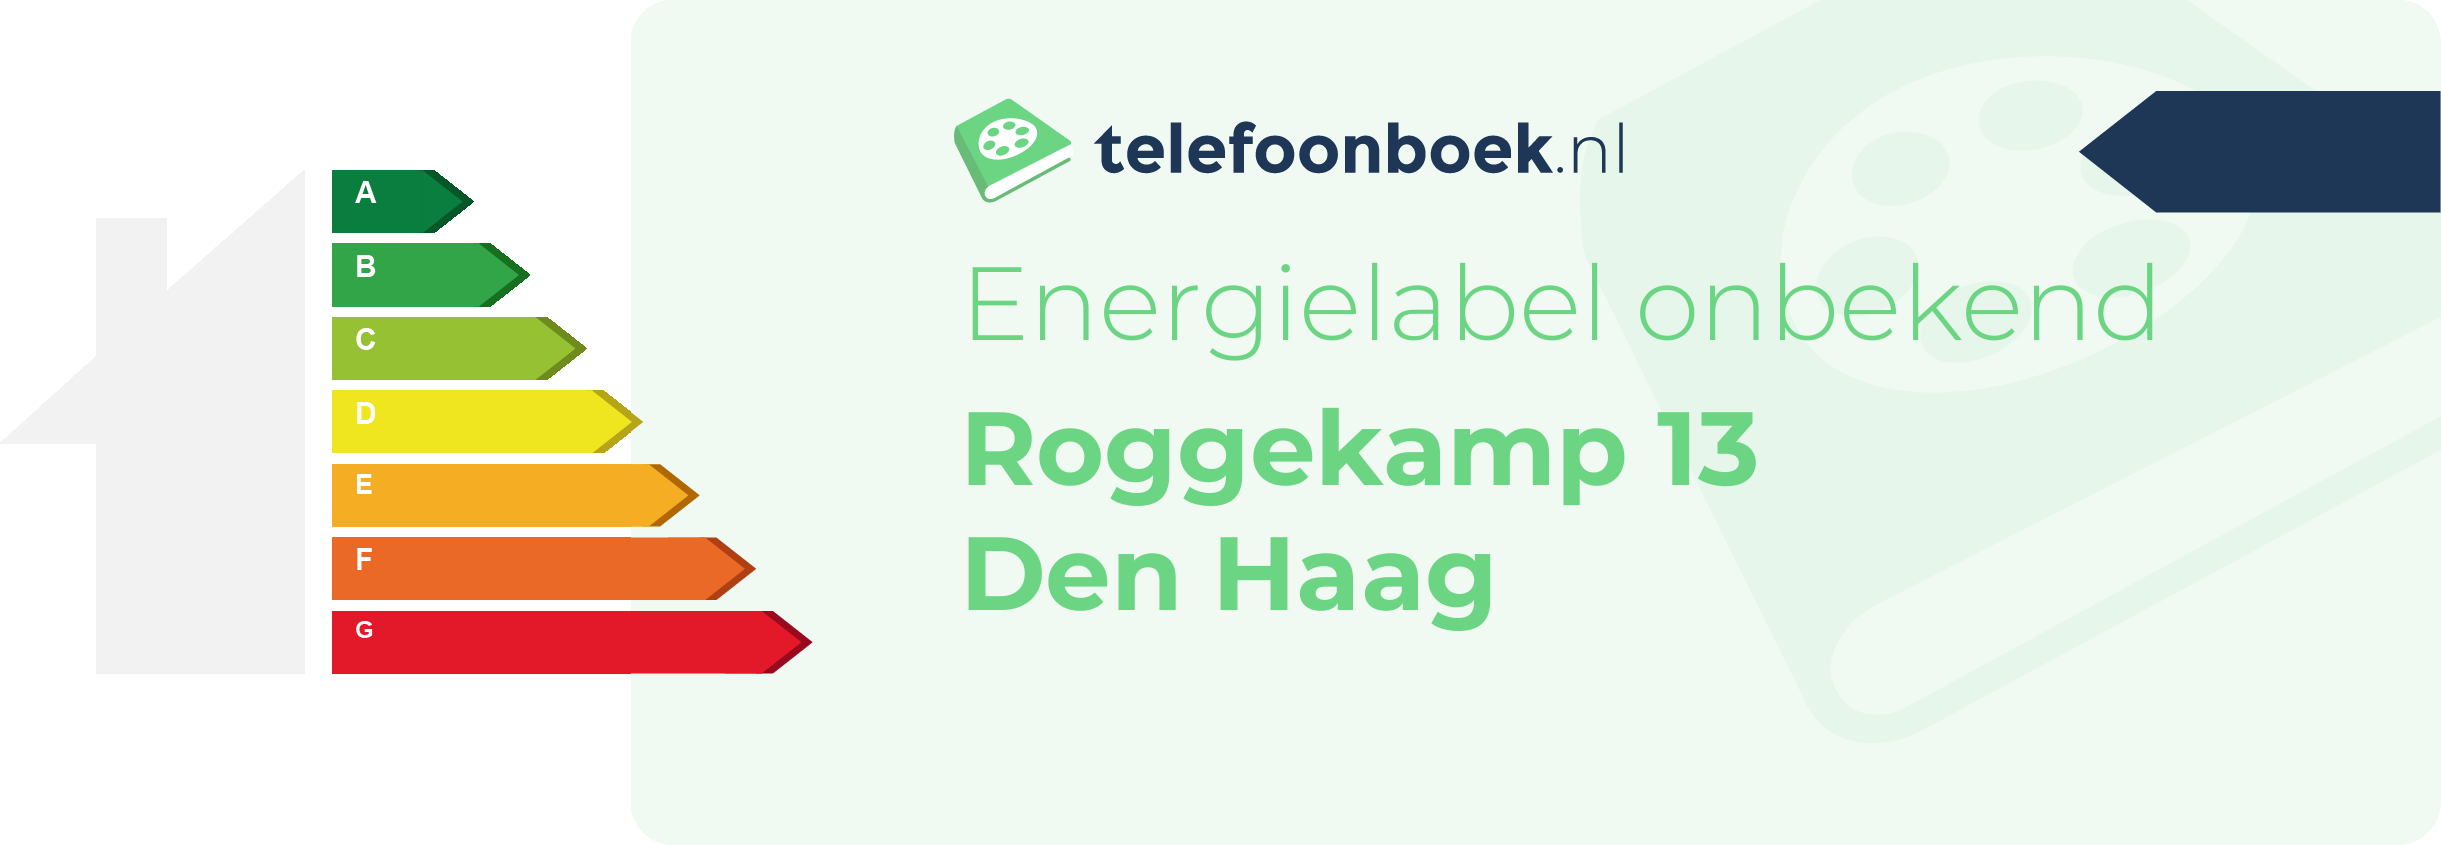 Energielabel Roggekamp 13 Den Haag